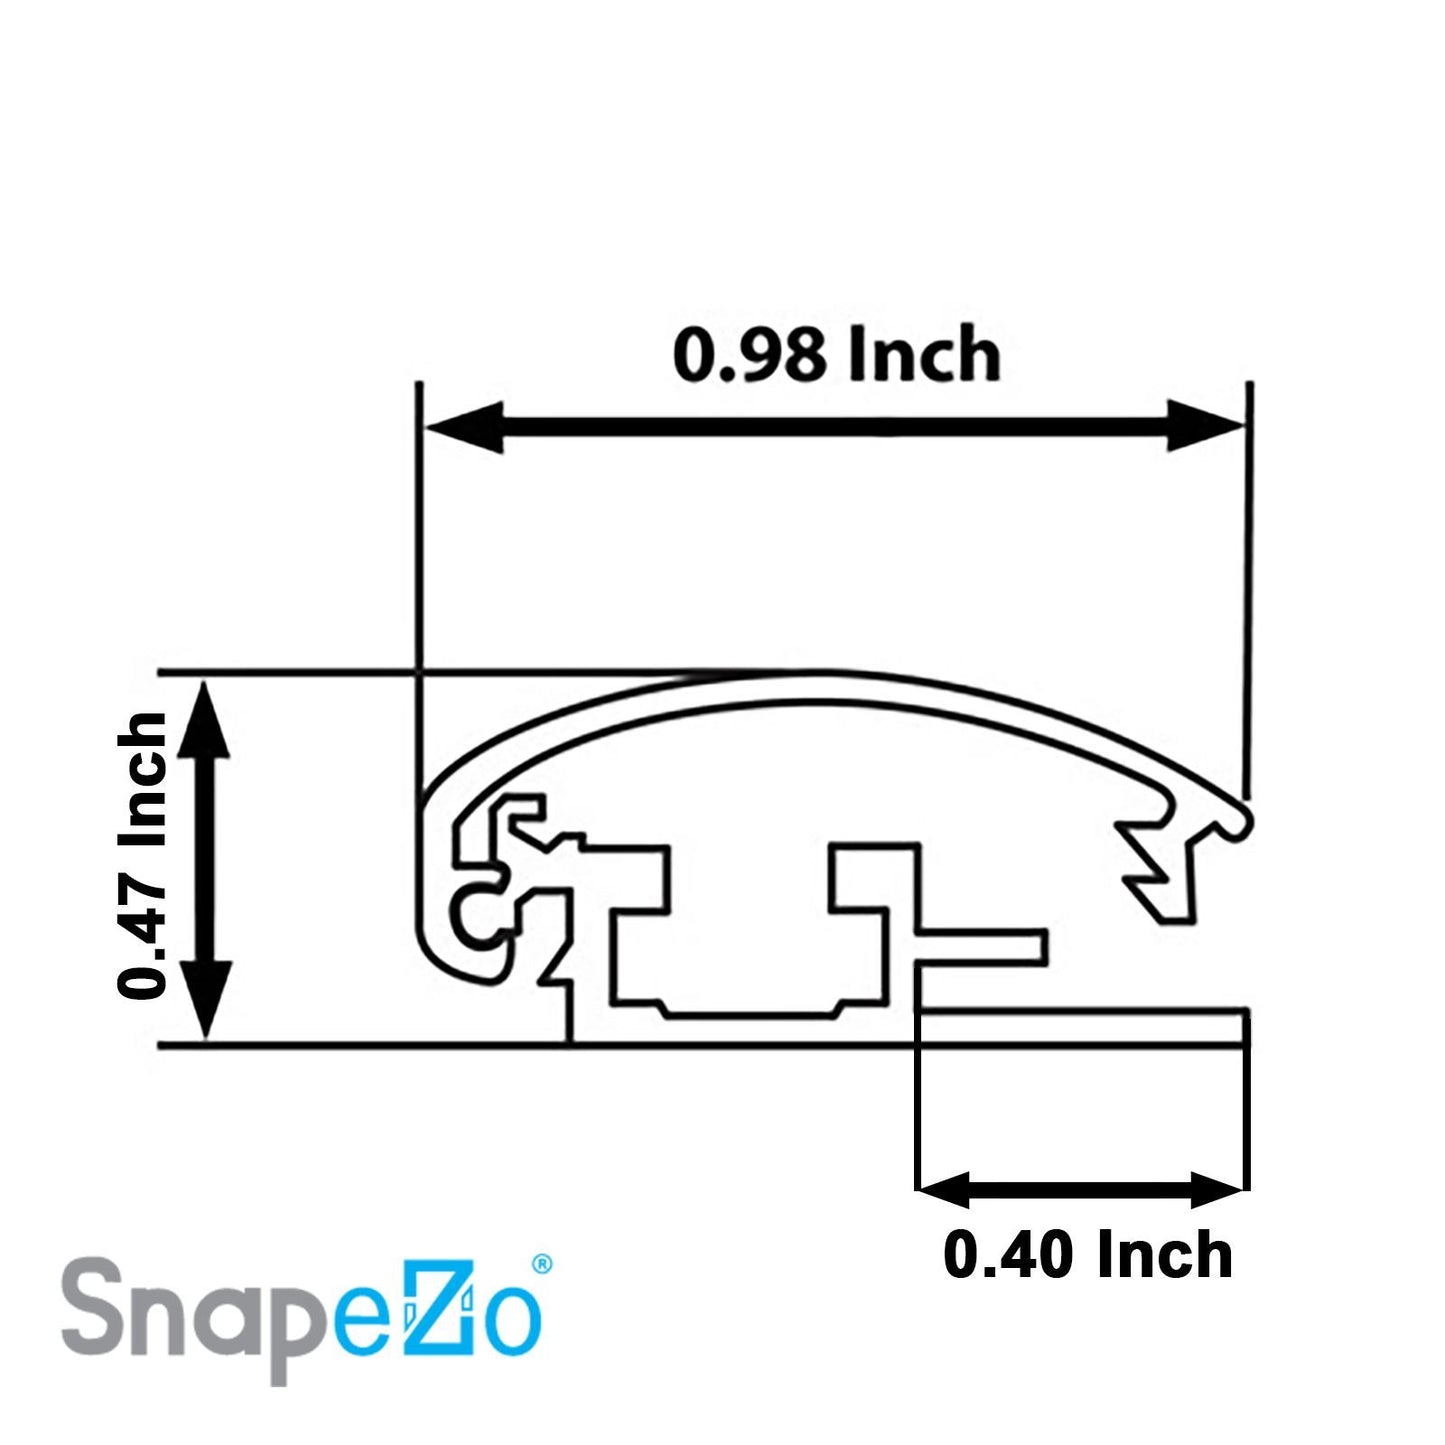 8.5x11 Brushed Black SnapeZo® Snap Frame - 1 Inch Profile